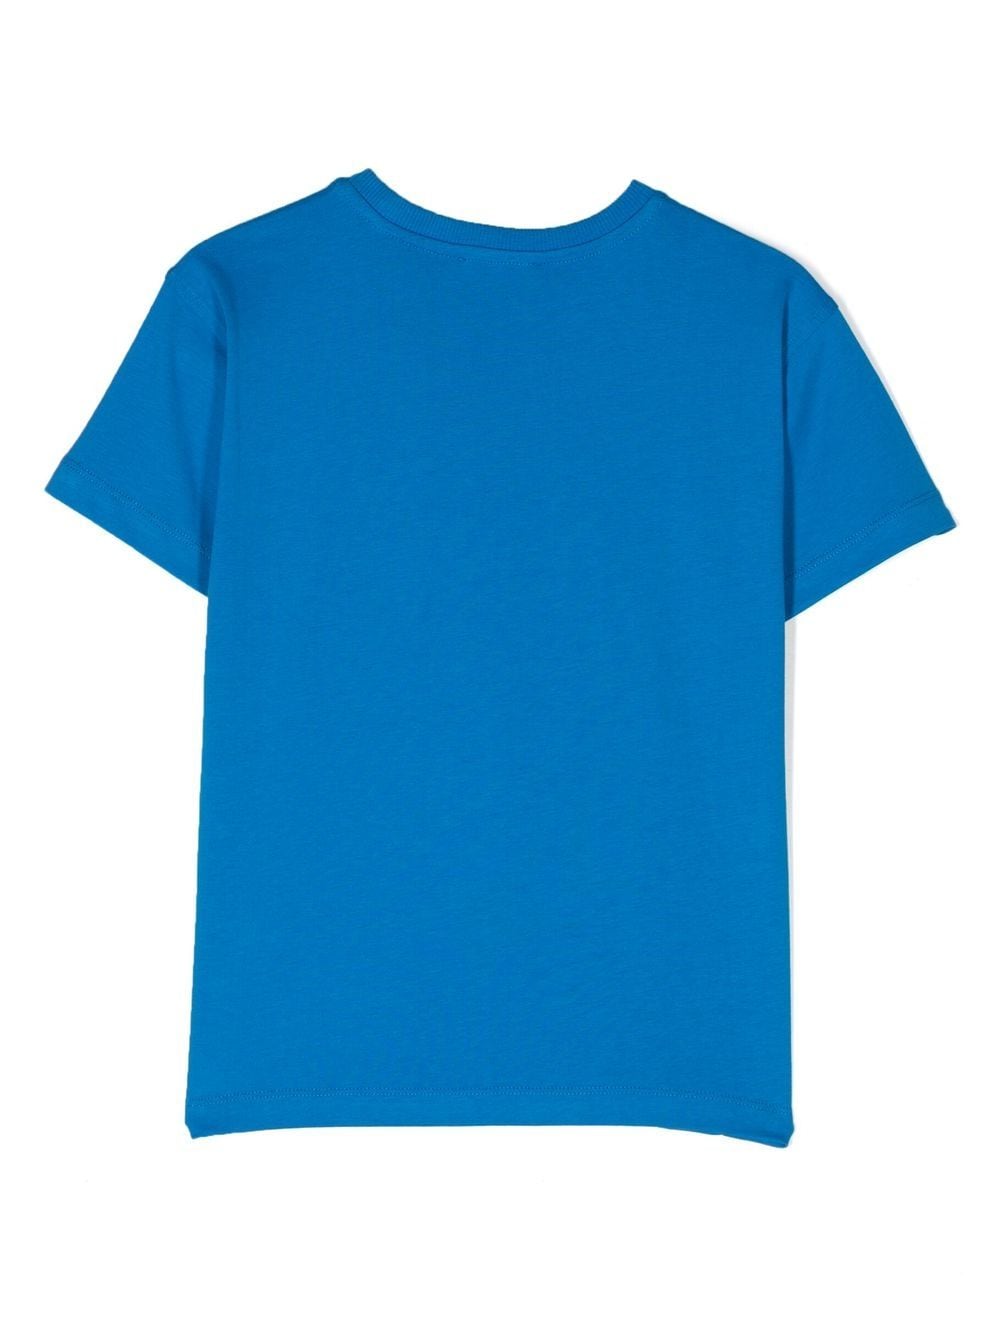 T-shirt blu per bambino con stampa